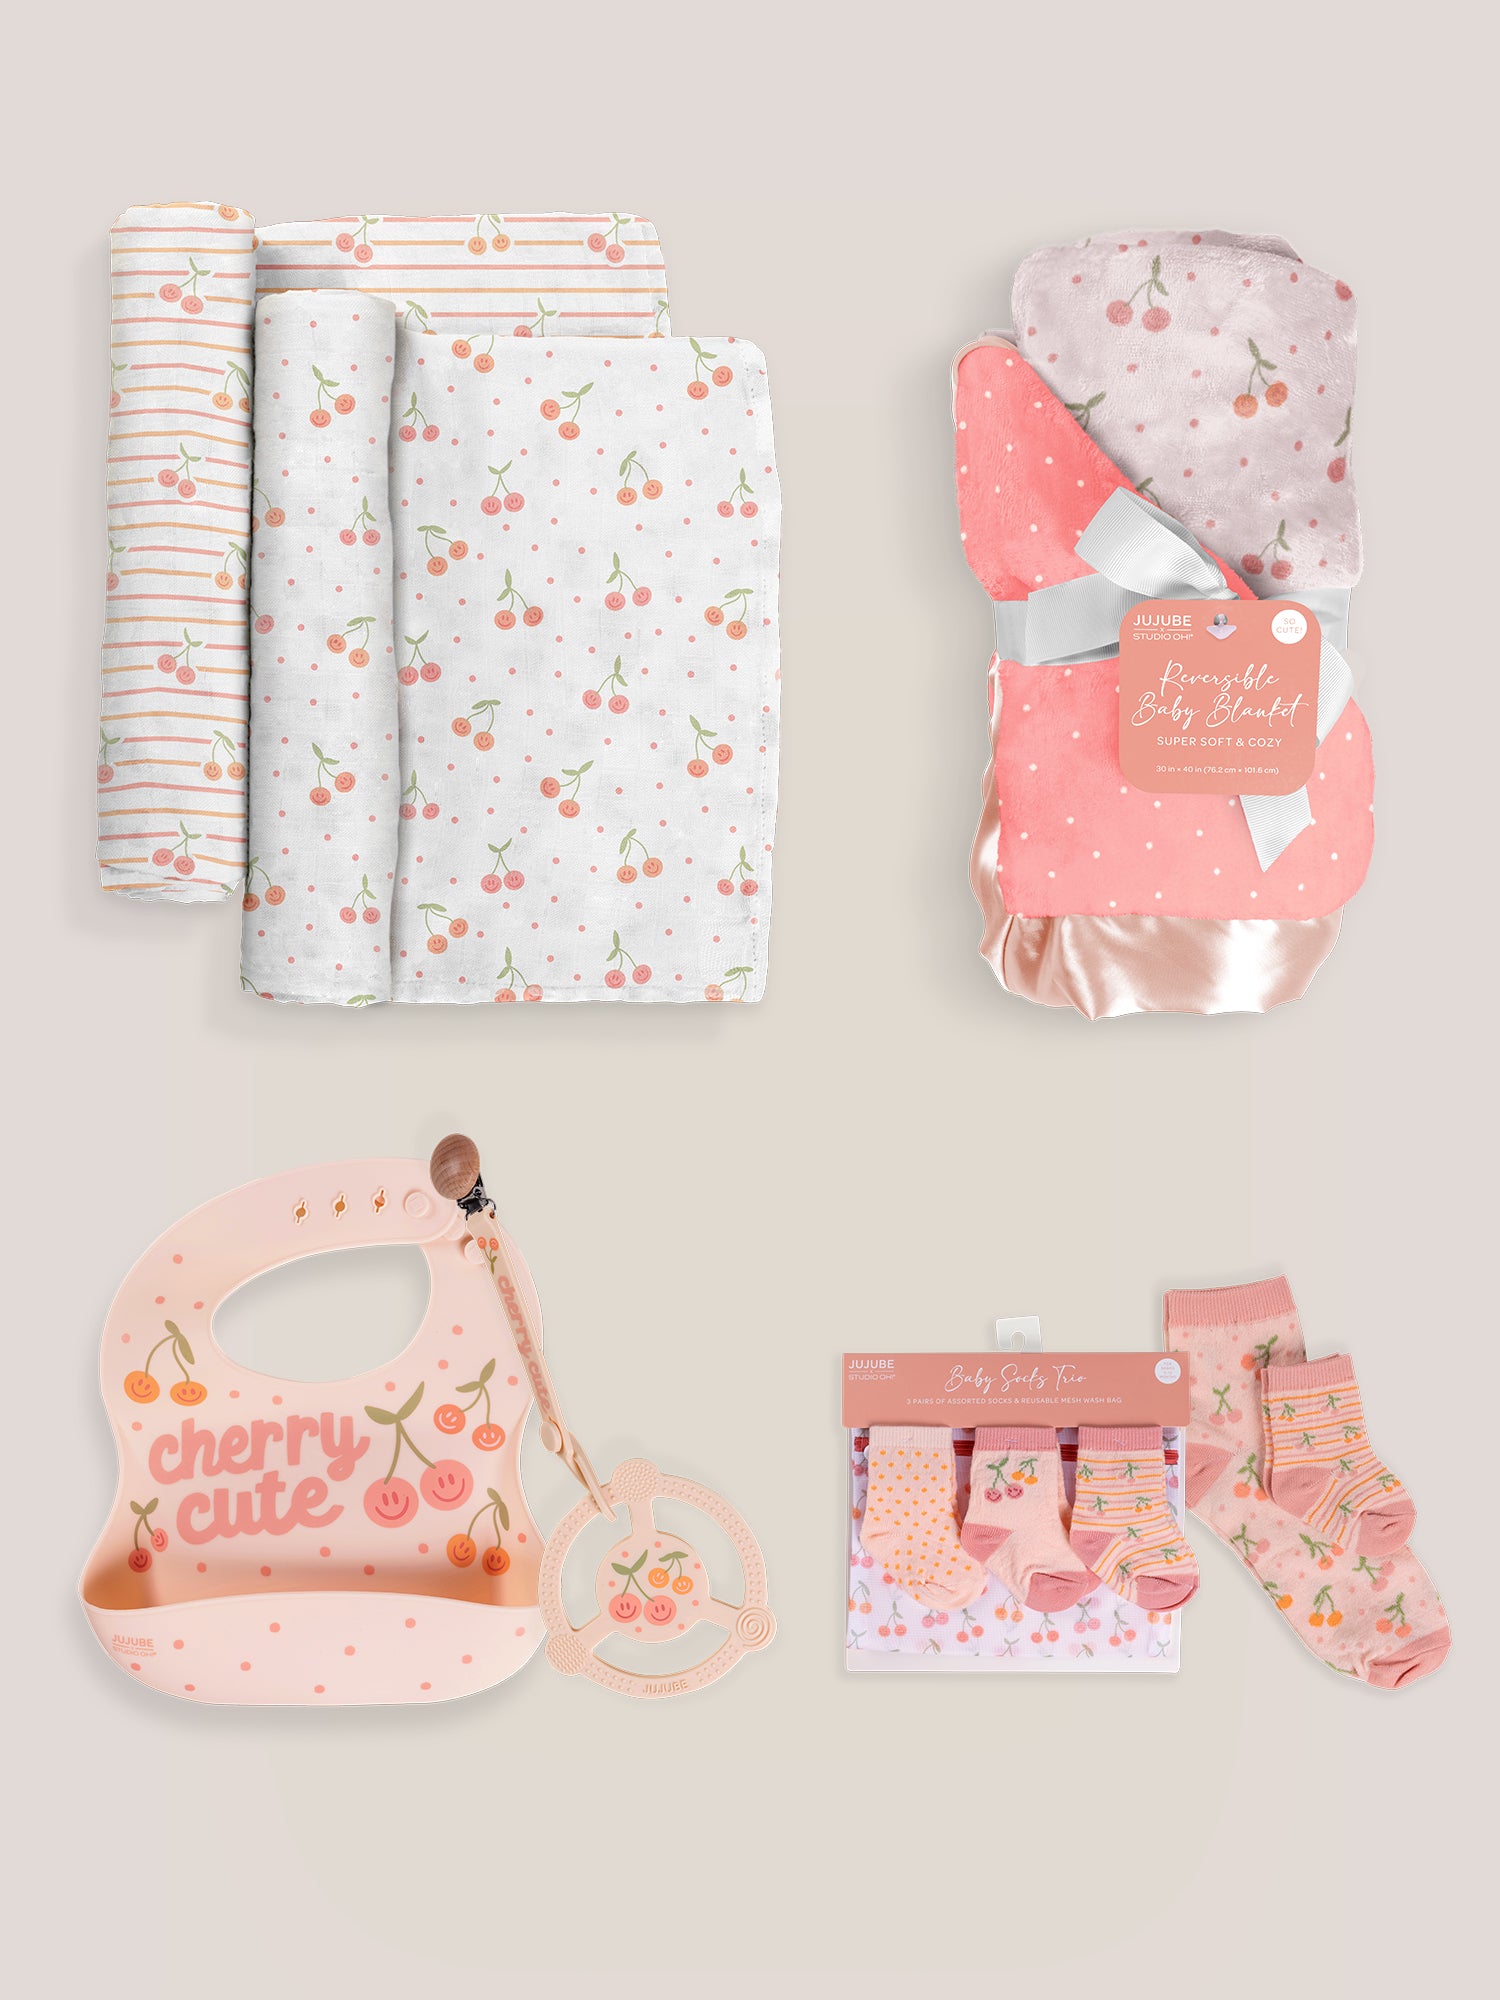 Everyday Essentials Baby Bundle: Cherry Cute